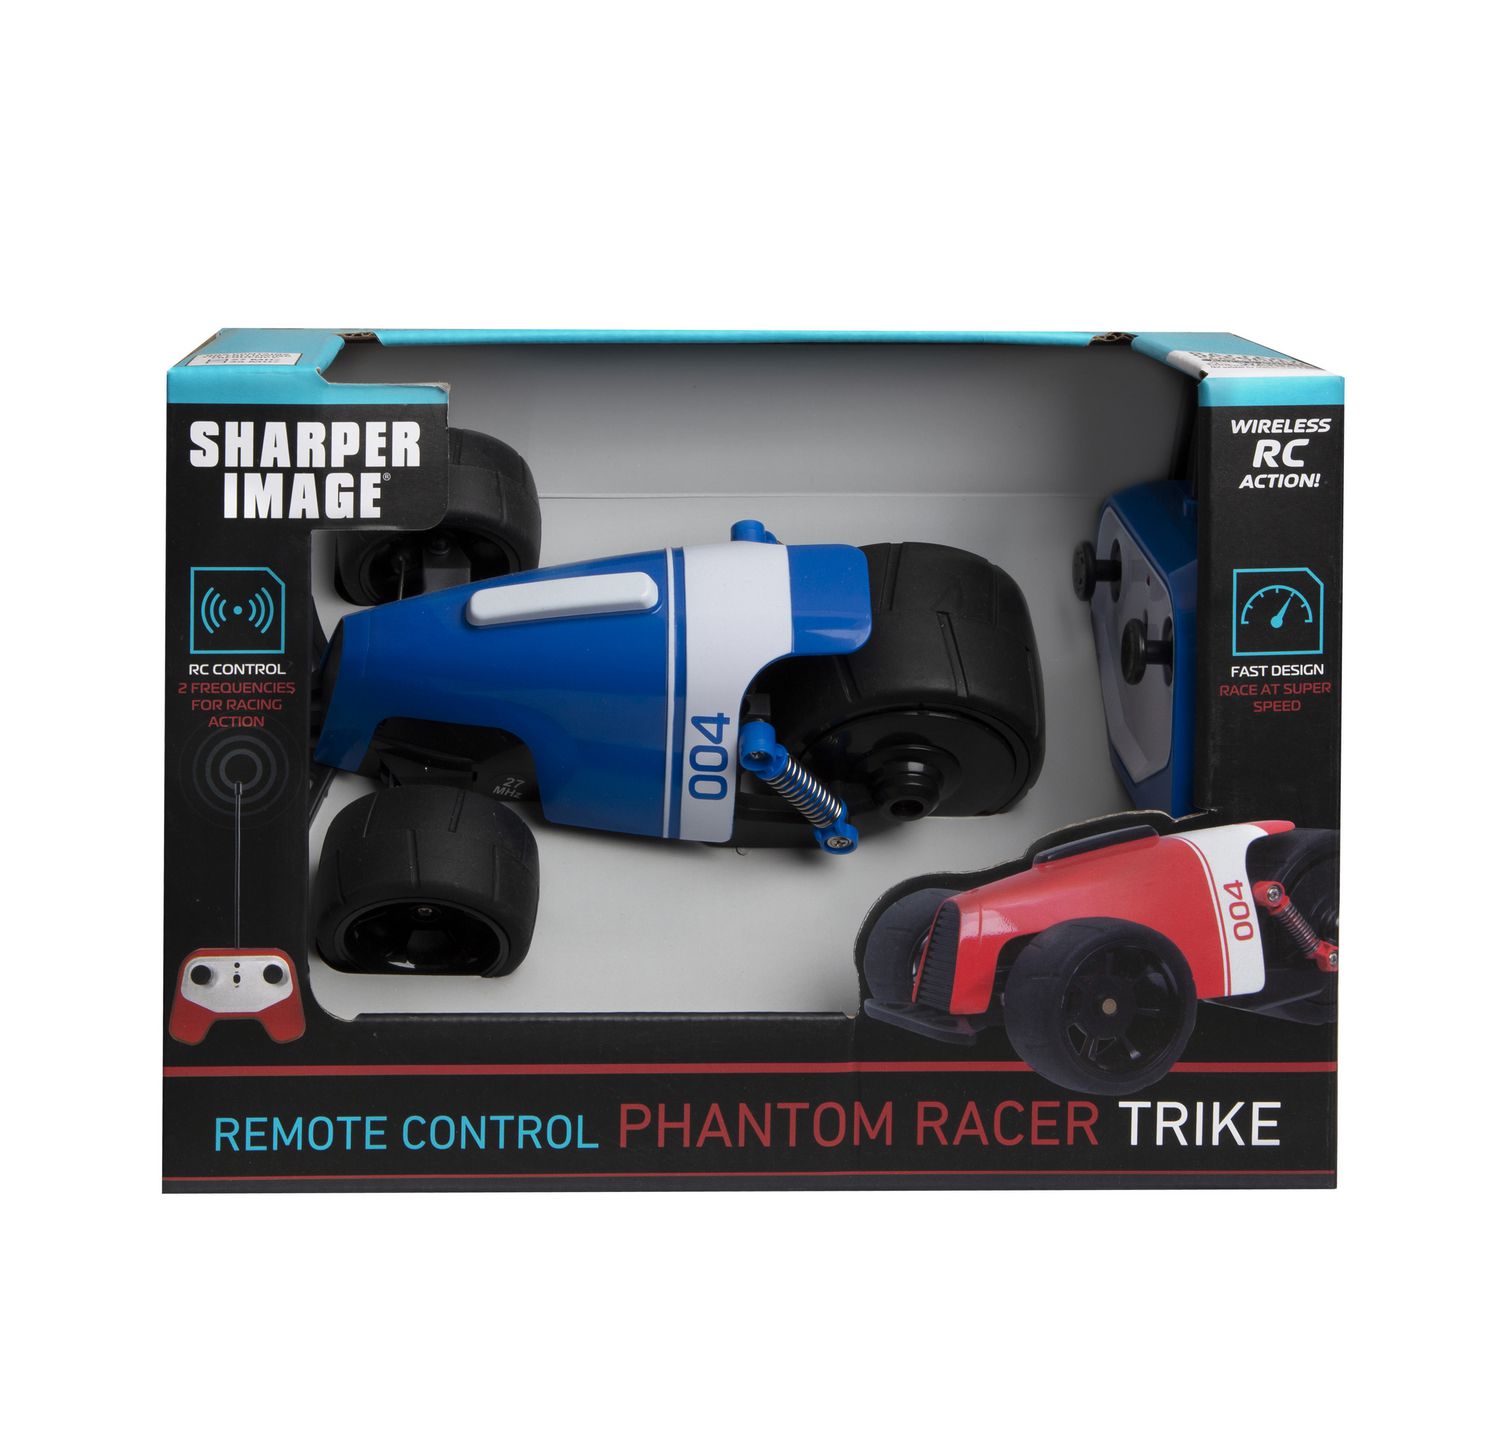 2 Sharper Image Wireless RC Action Remote Control Phantom Racer Trike Blue for sale online 